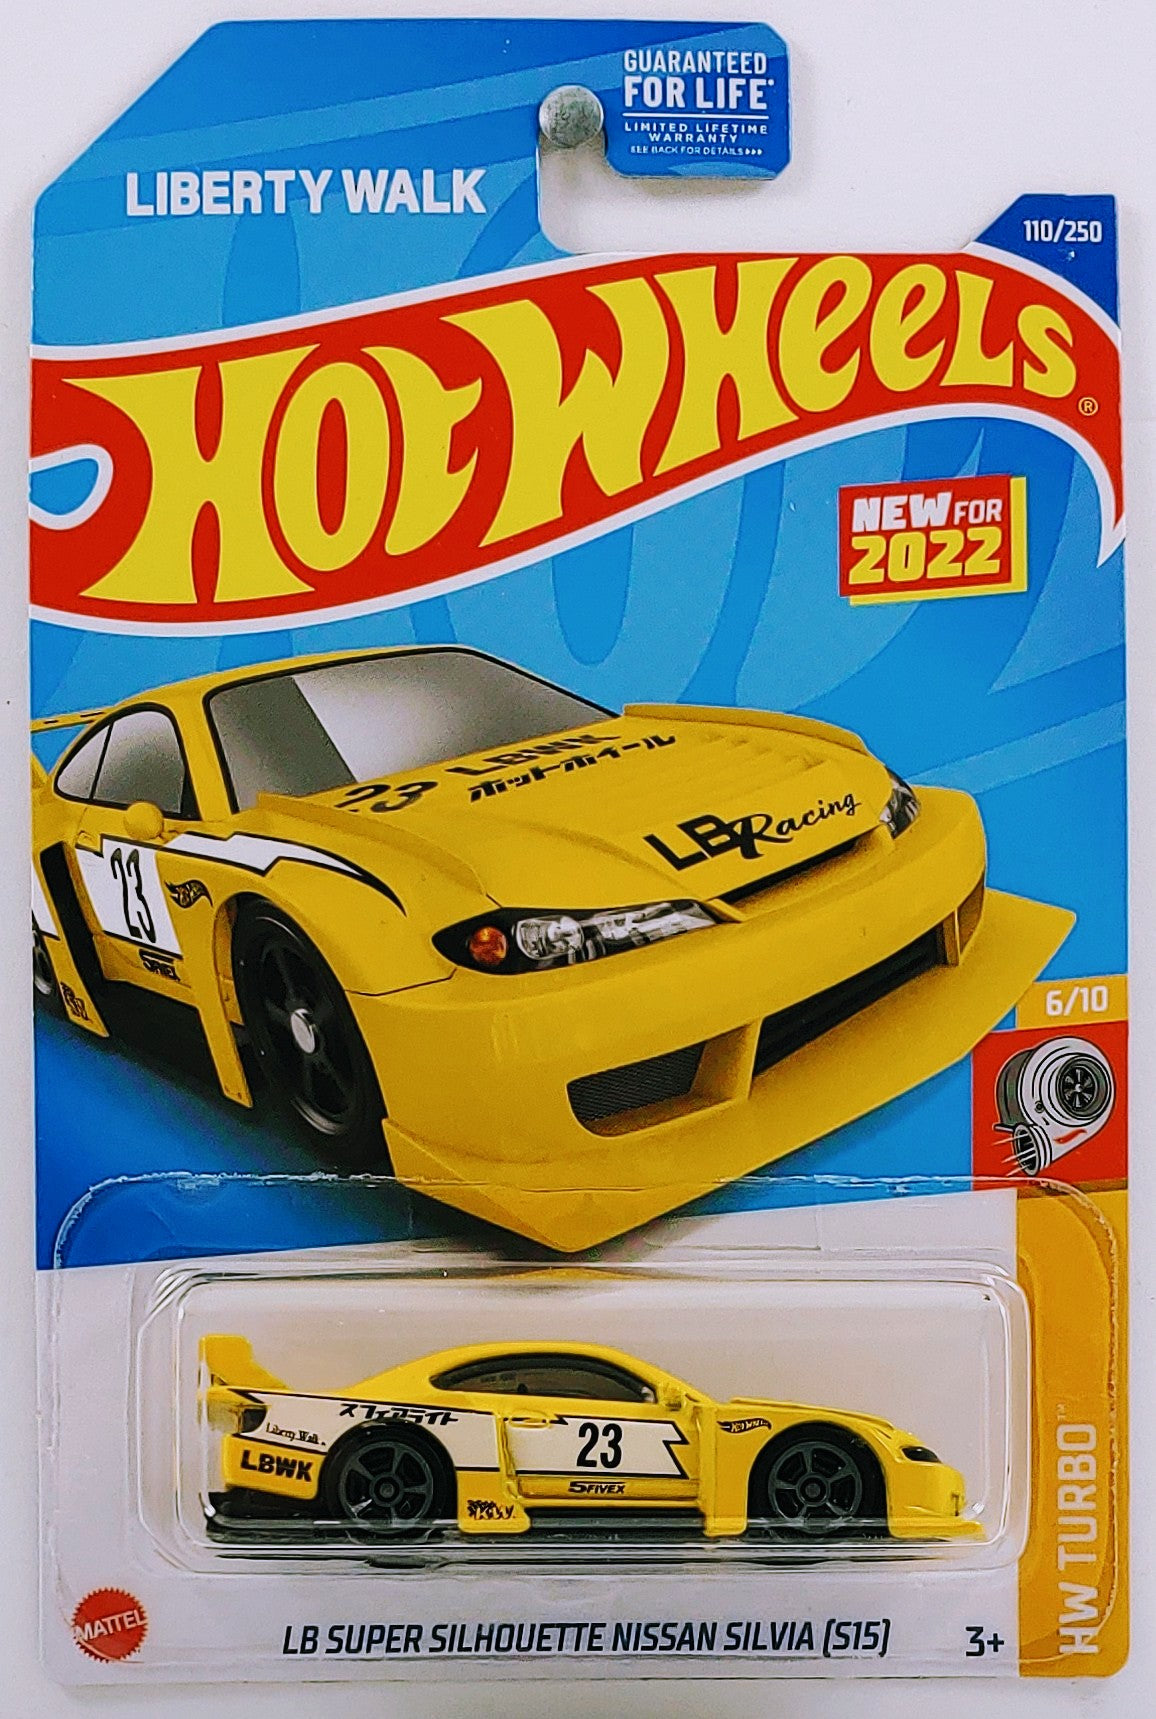 Hot Wheels 2022 - Collector # 110/250 - HW Turbo 6/10 - LB Super Silhouette Nissan Silvia (S15) - Yellow - USA 'Liberty Walk' Card